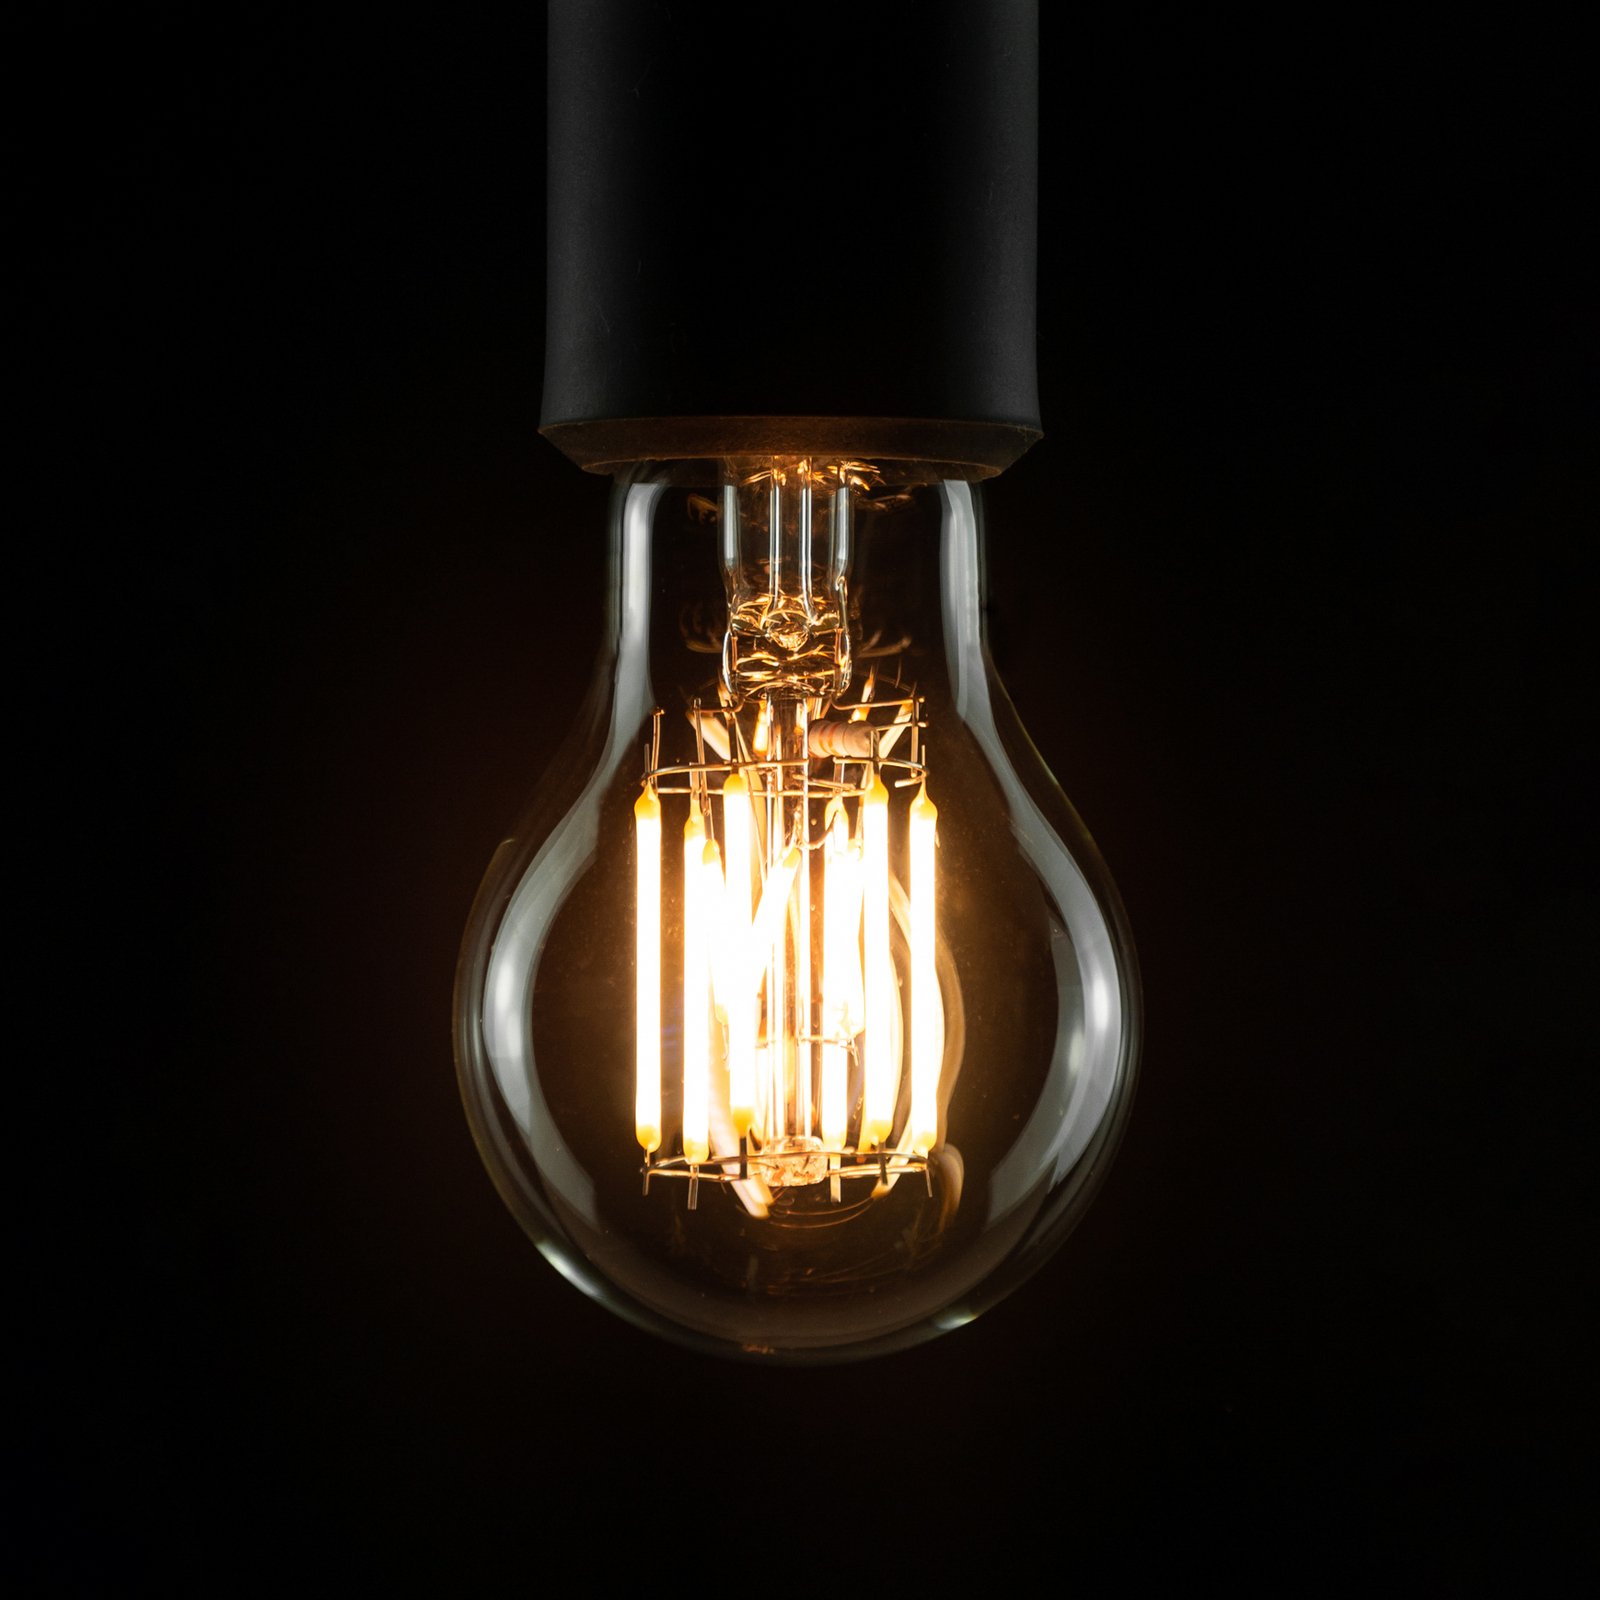 SEGULA-LED-lamppu E27 6,5W Filam ambient-dimming